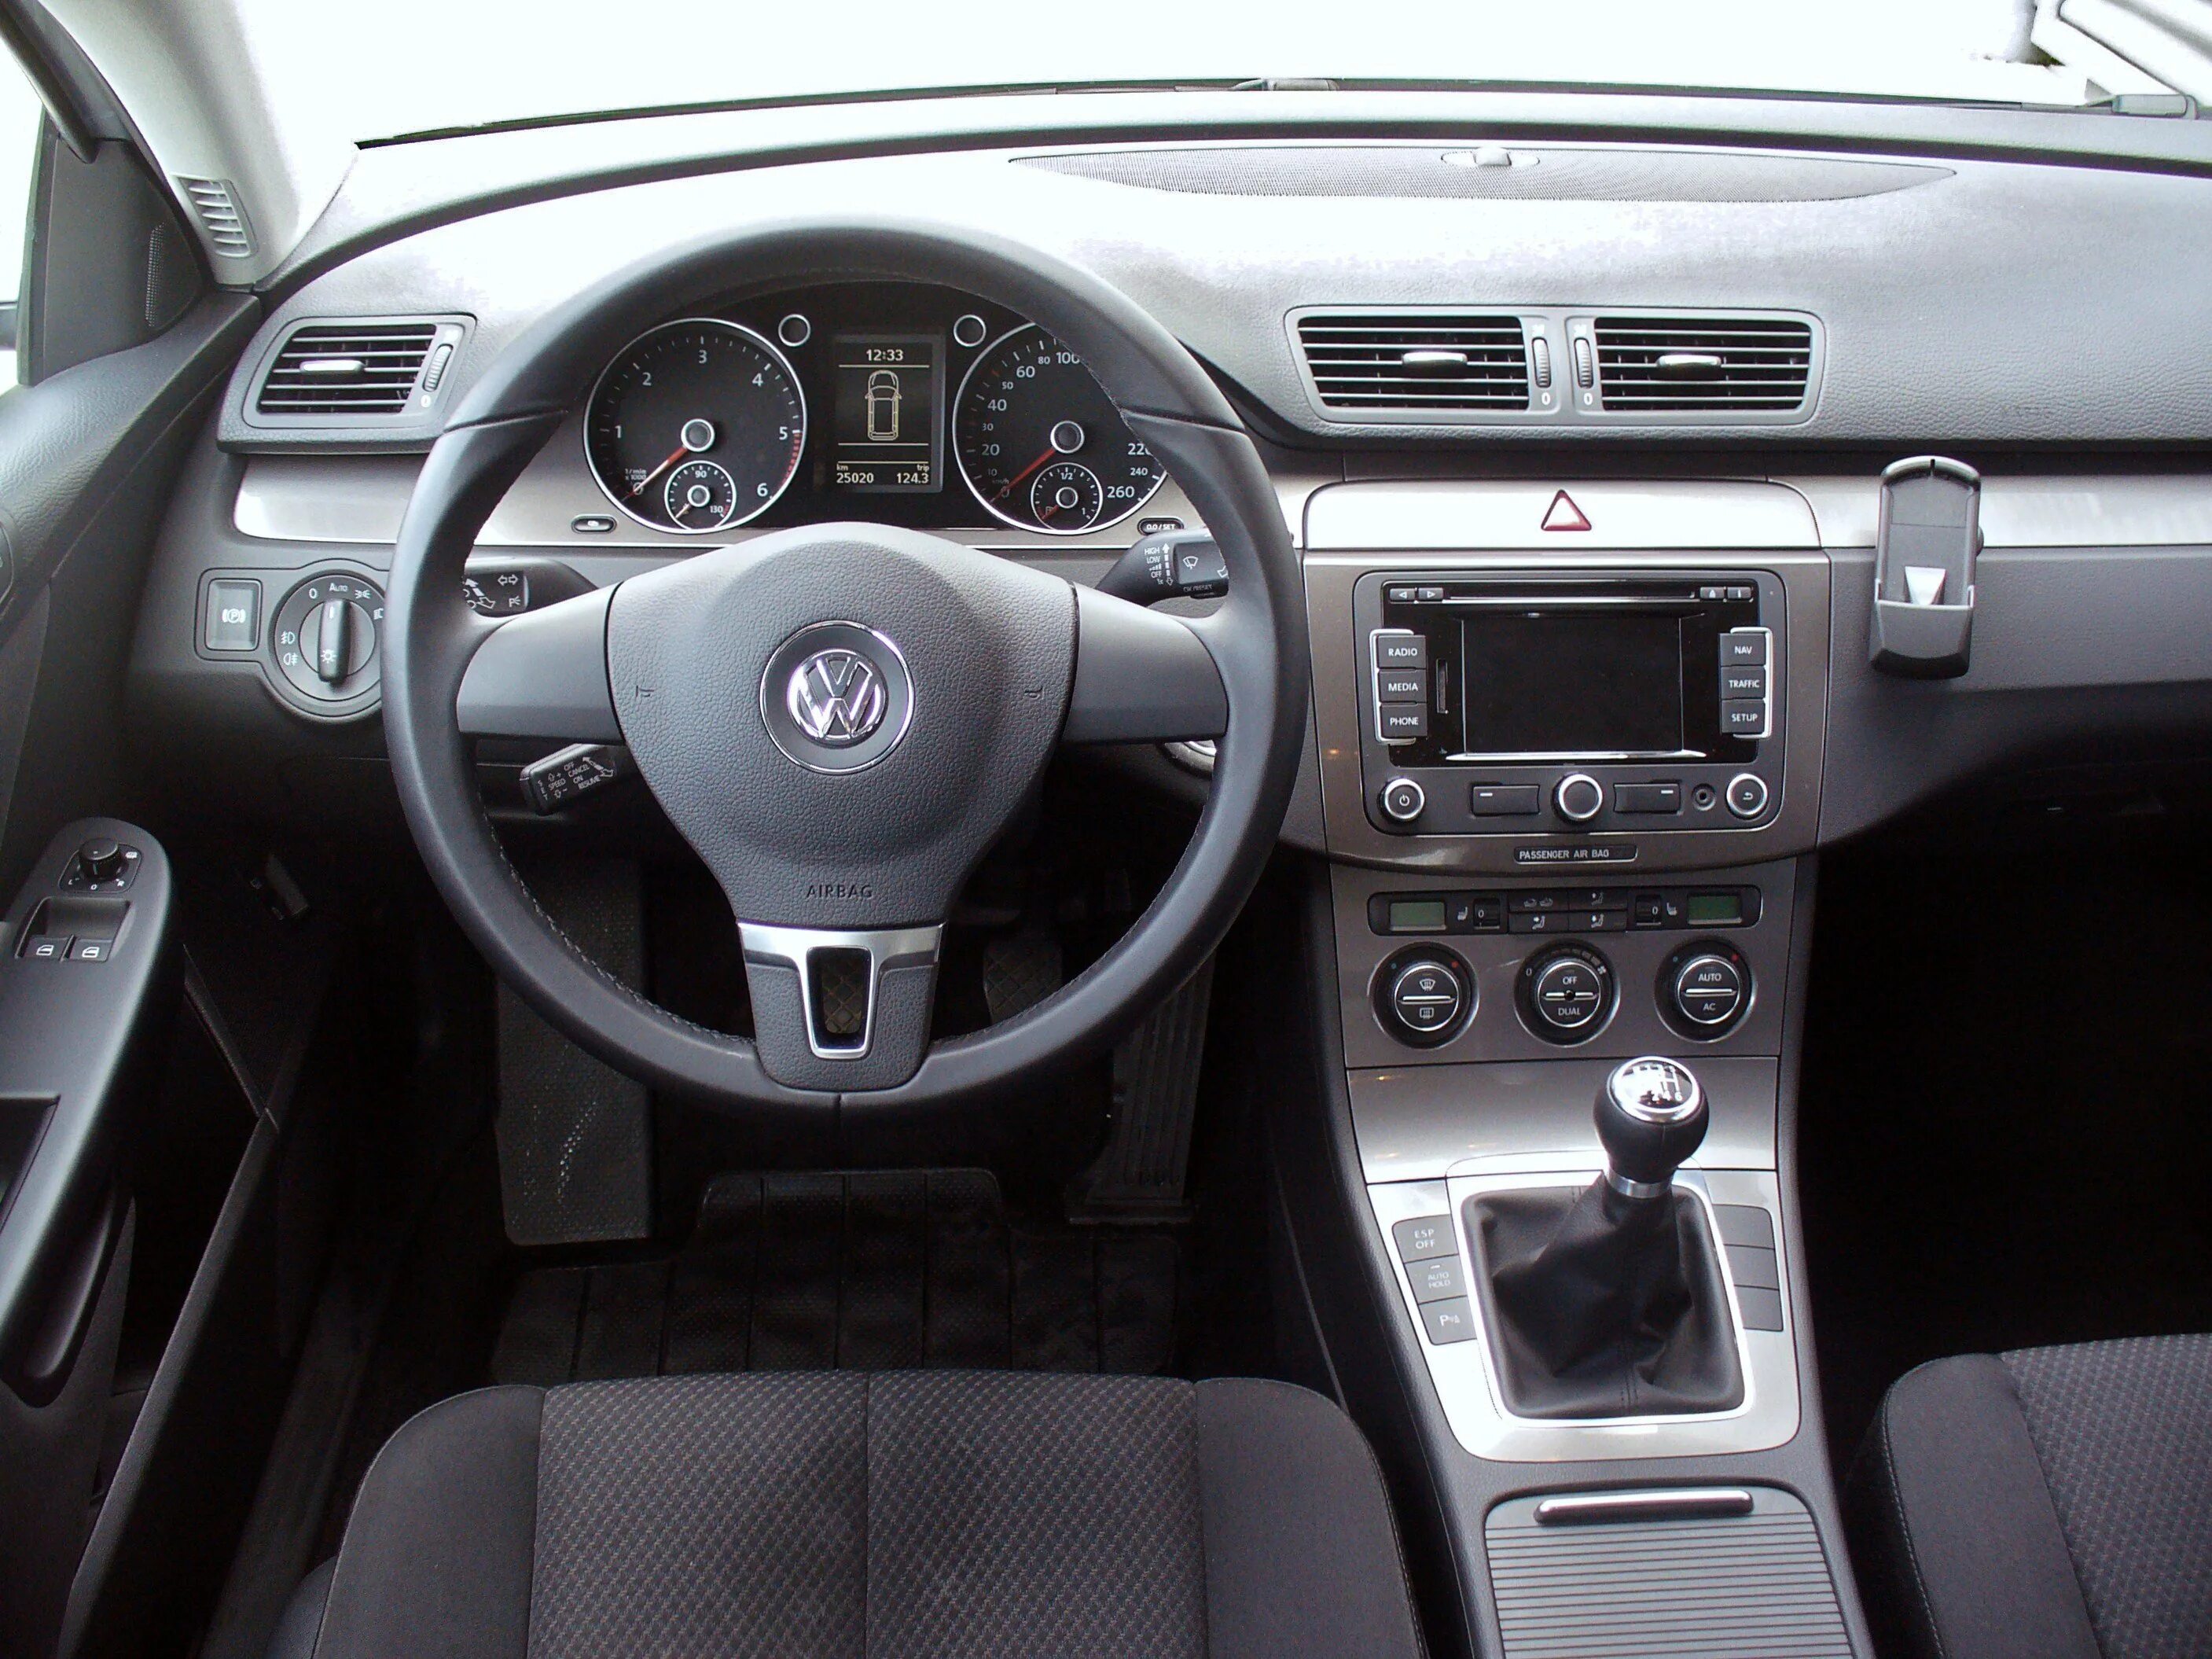 Пассат б6 2.0 автомат. VW Passat b6 Interior. Фольксваген Пассат б6 салон. Фольксваген Пассат 2008 салон. Фольксваген Пассат 2008 года салон.